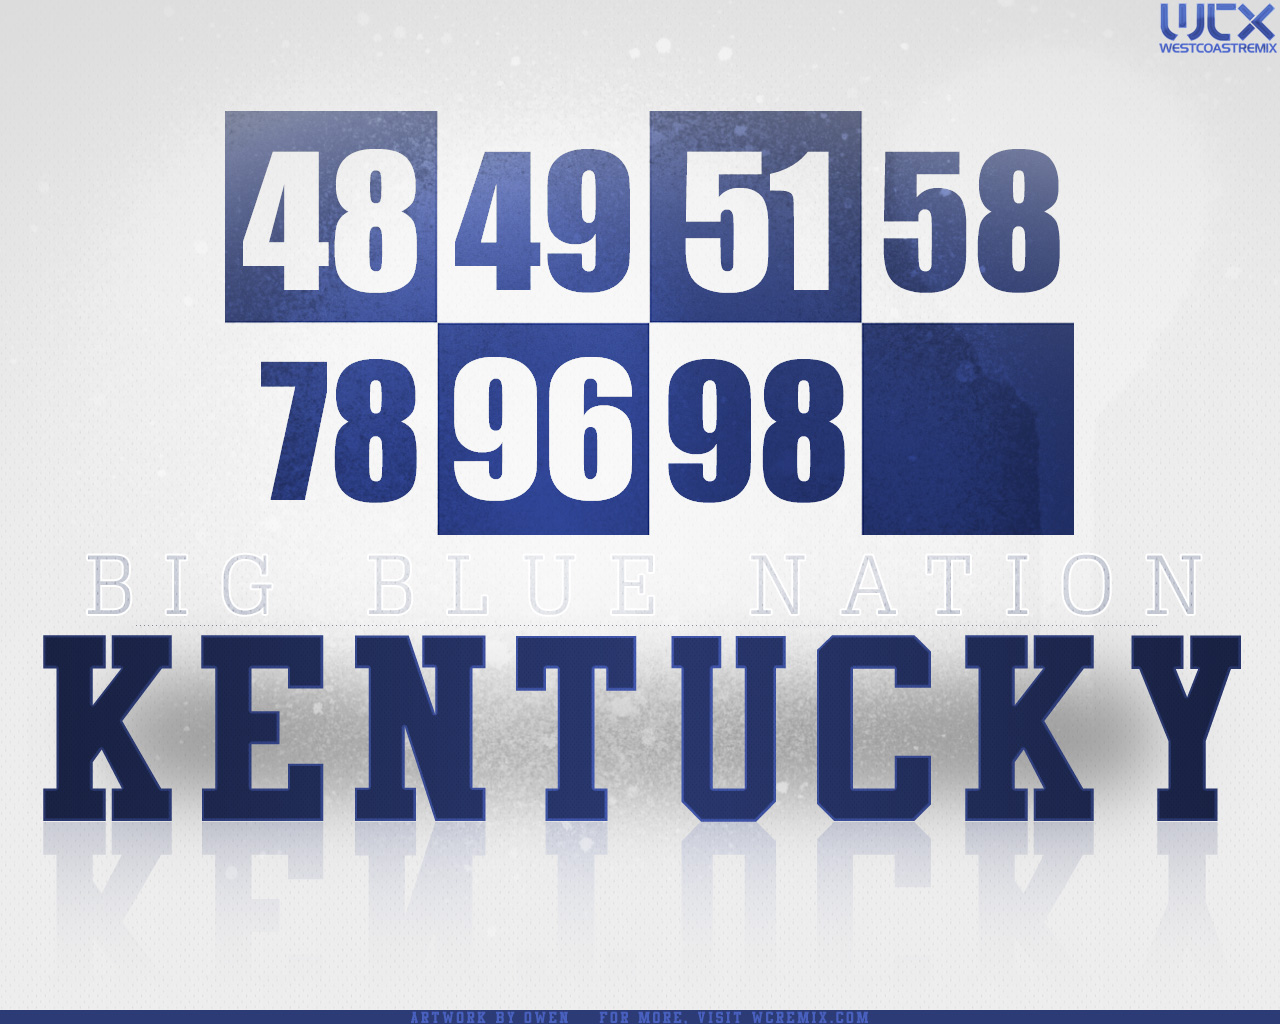 Kentucky Wildcats [NCAA Basketball]